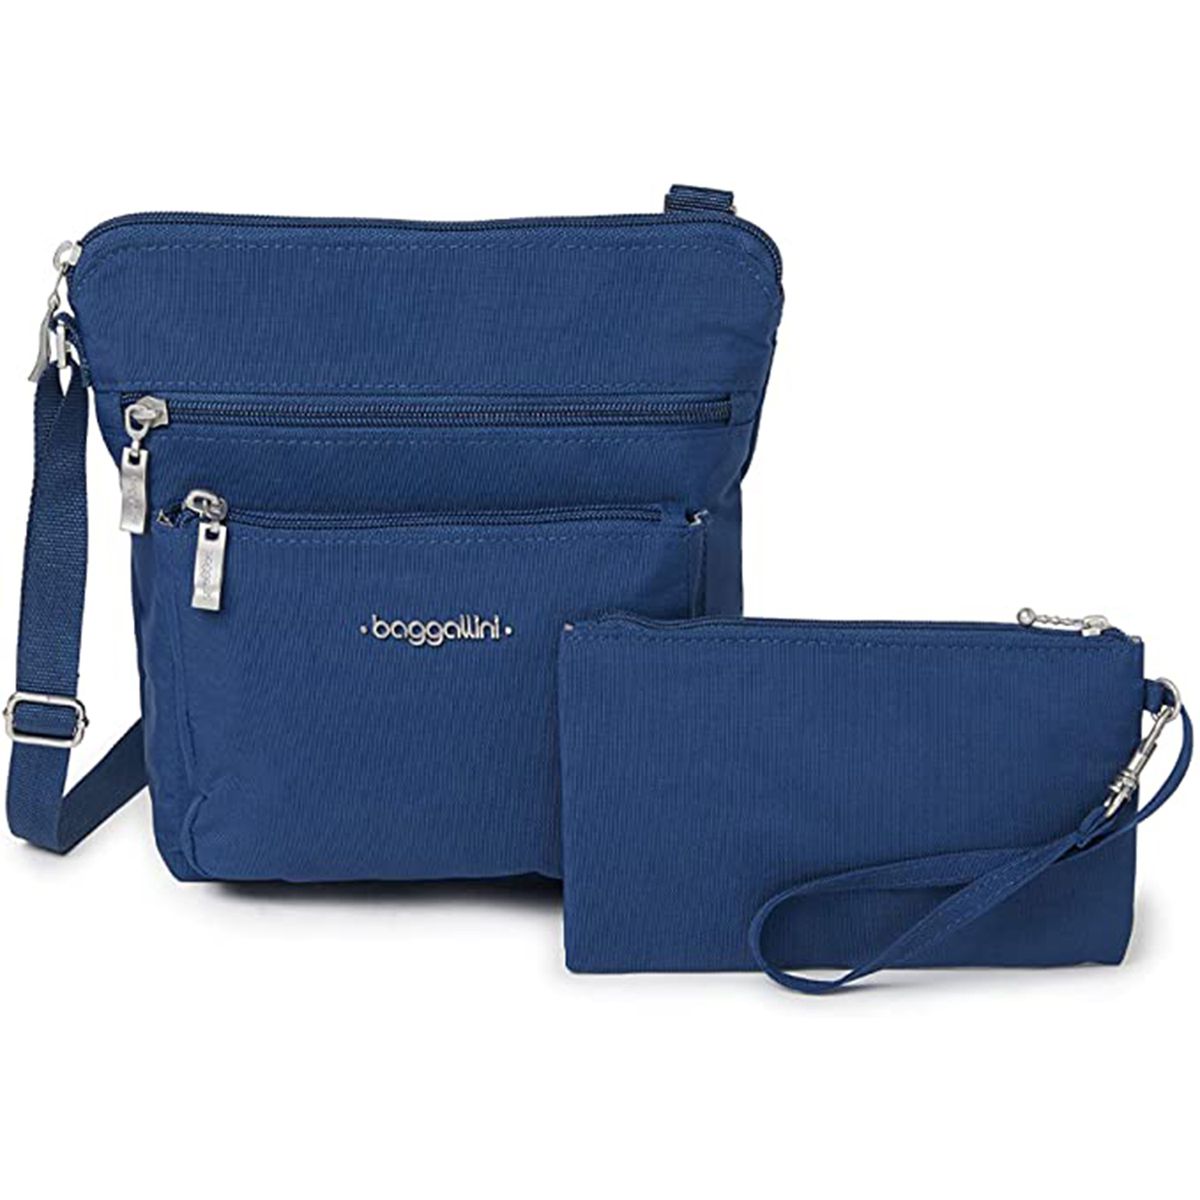 Baggallini womens Handbags